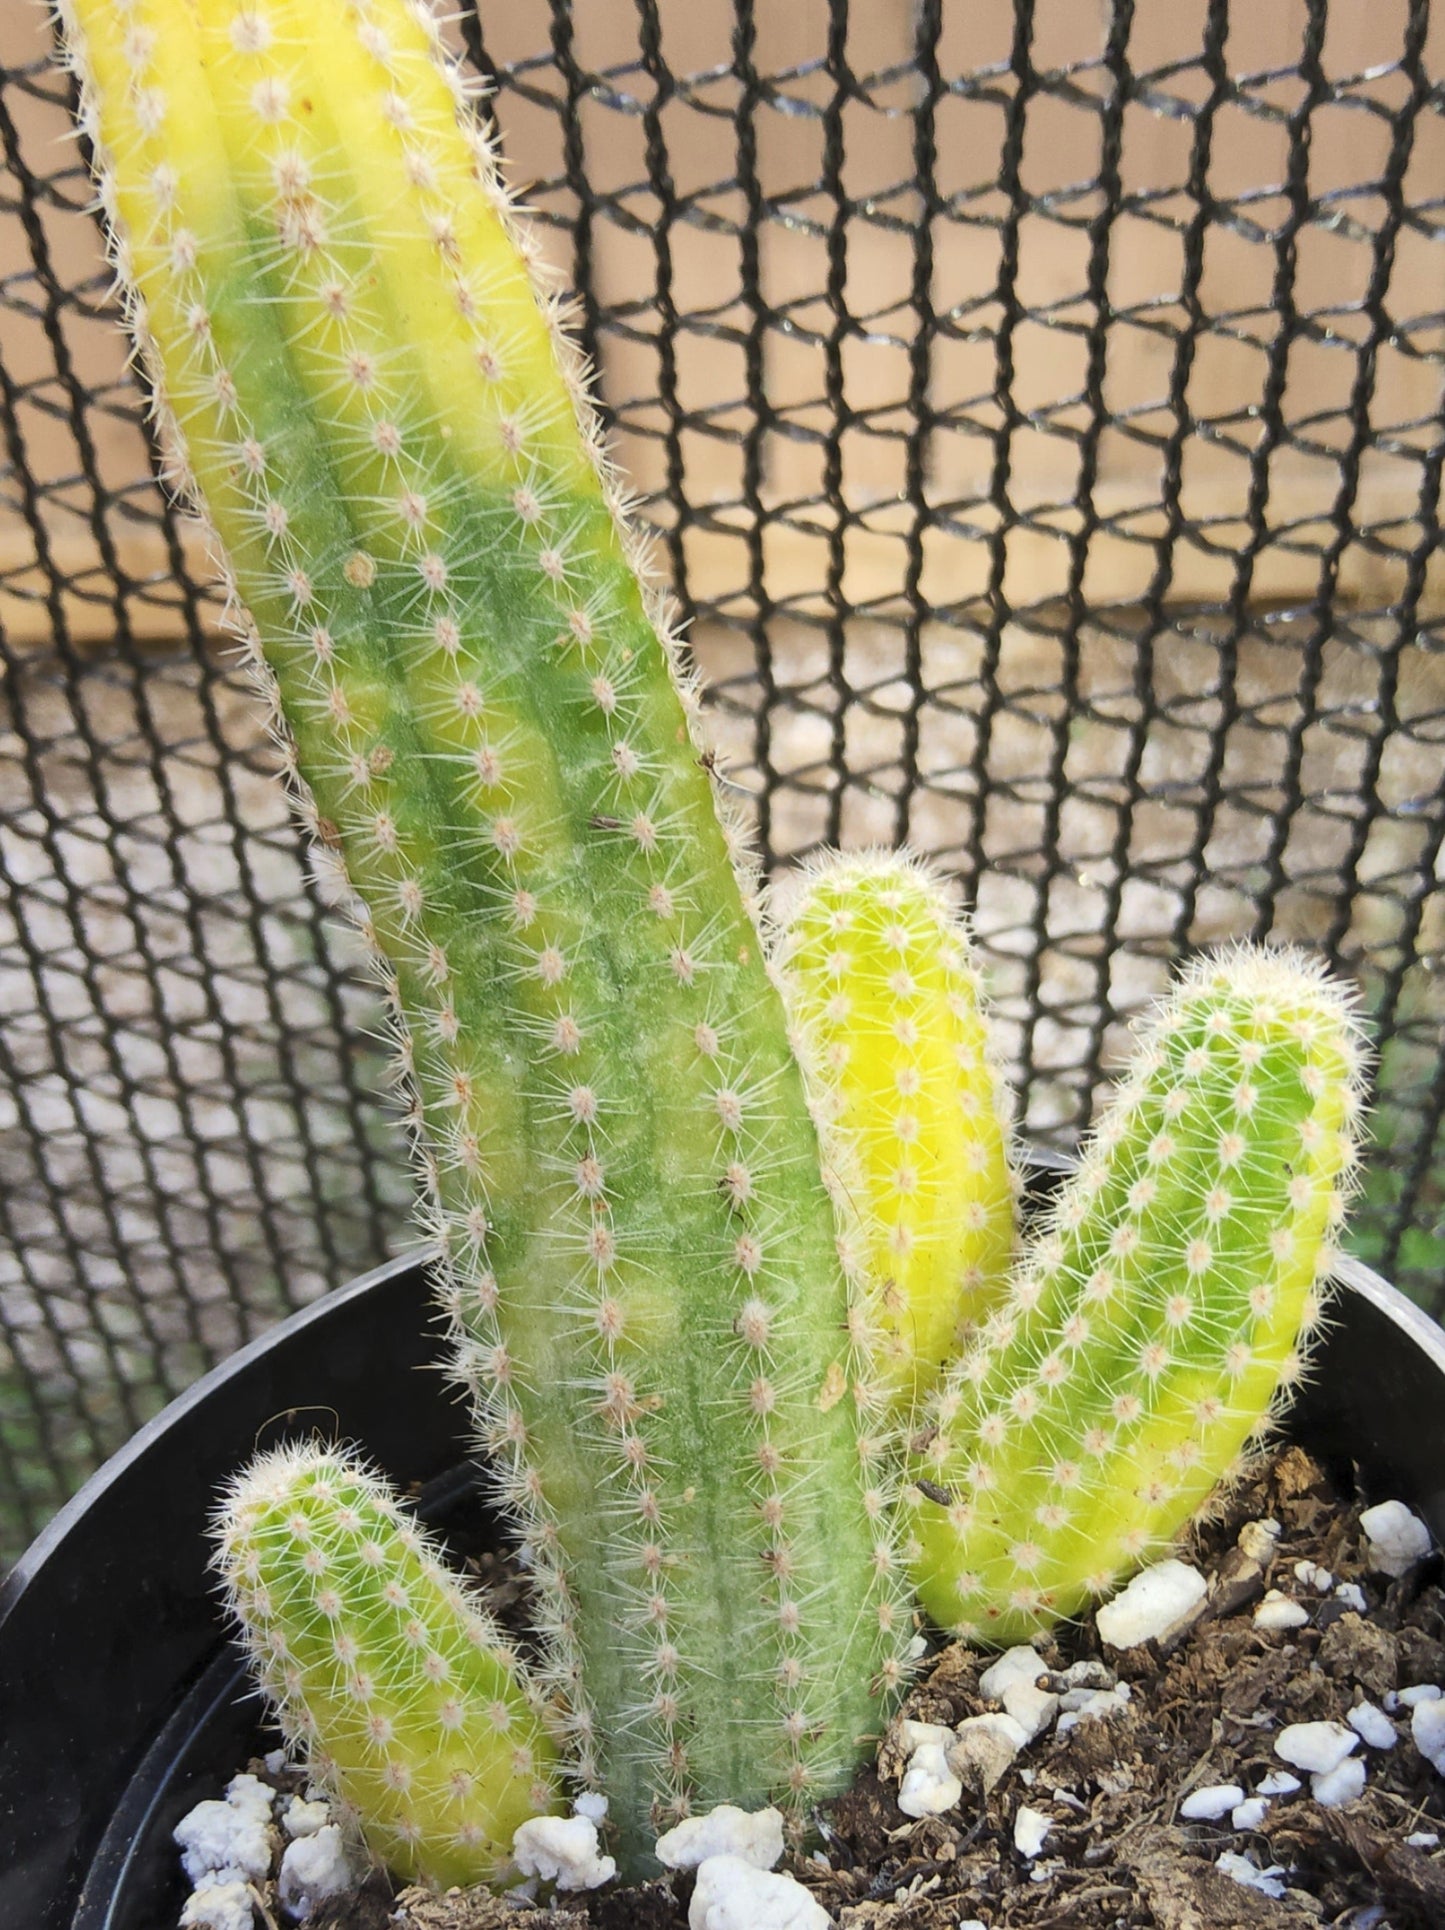 Echinopsis chamaecereus variagata aka Variegated Peanut Cactus, Live Cactus Growing in 4 Inch